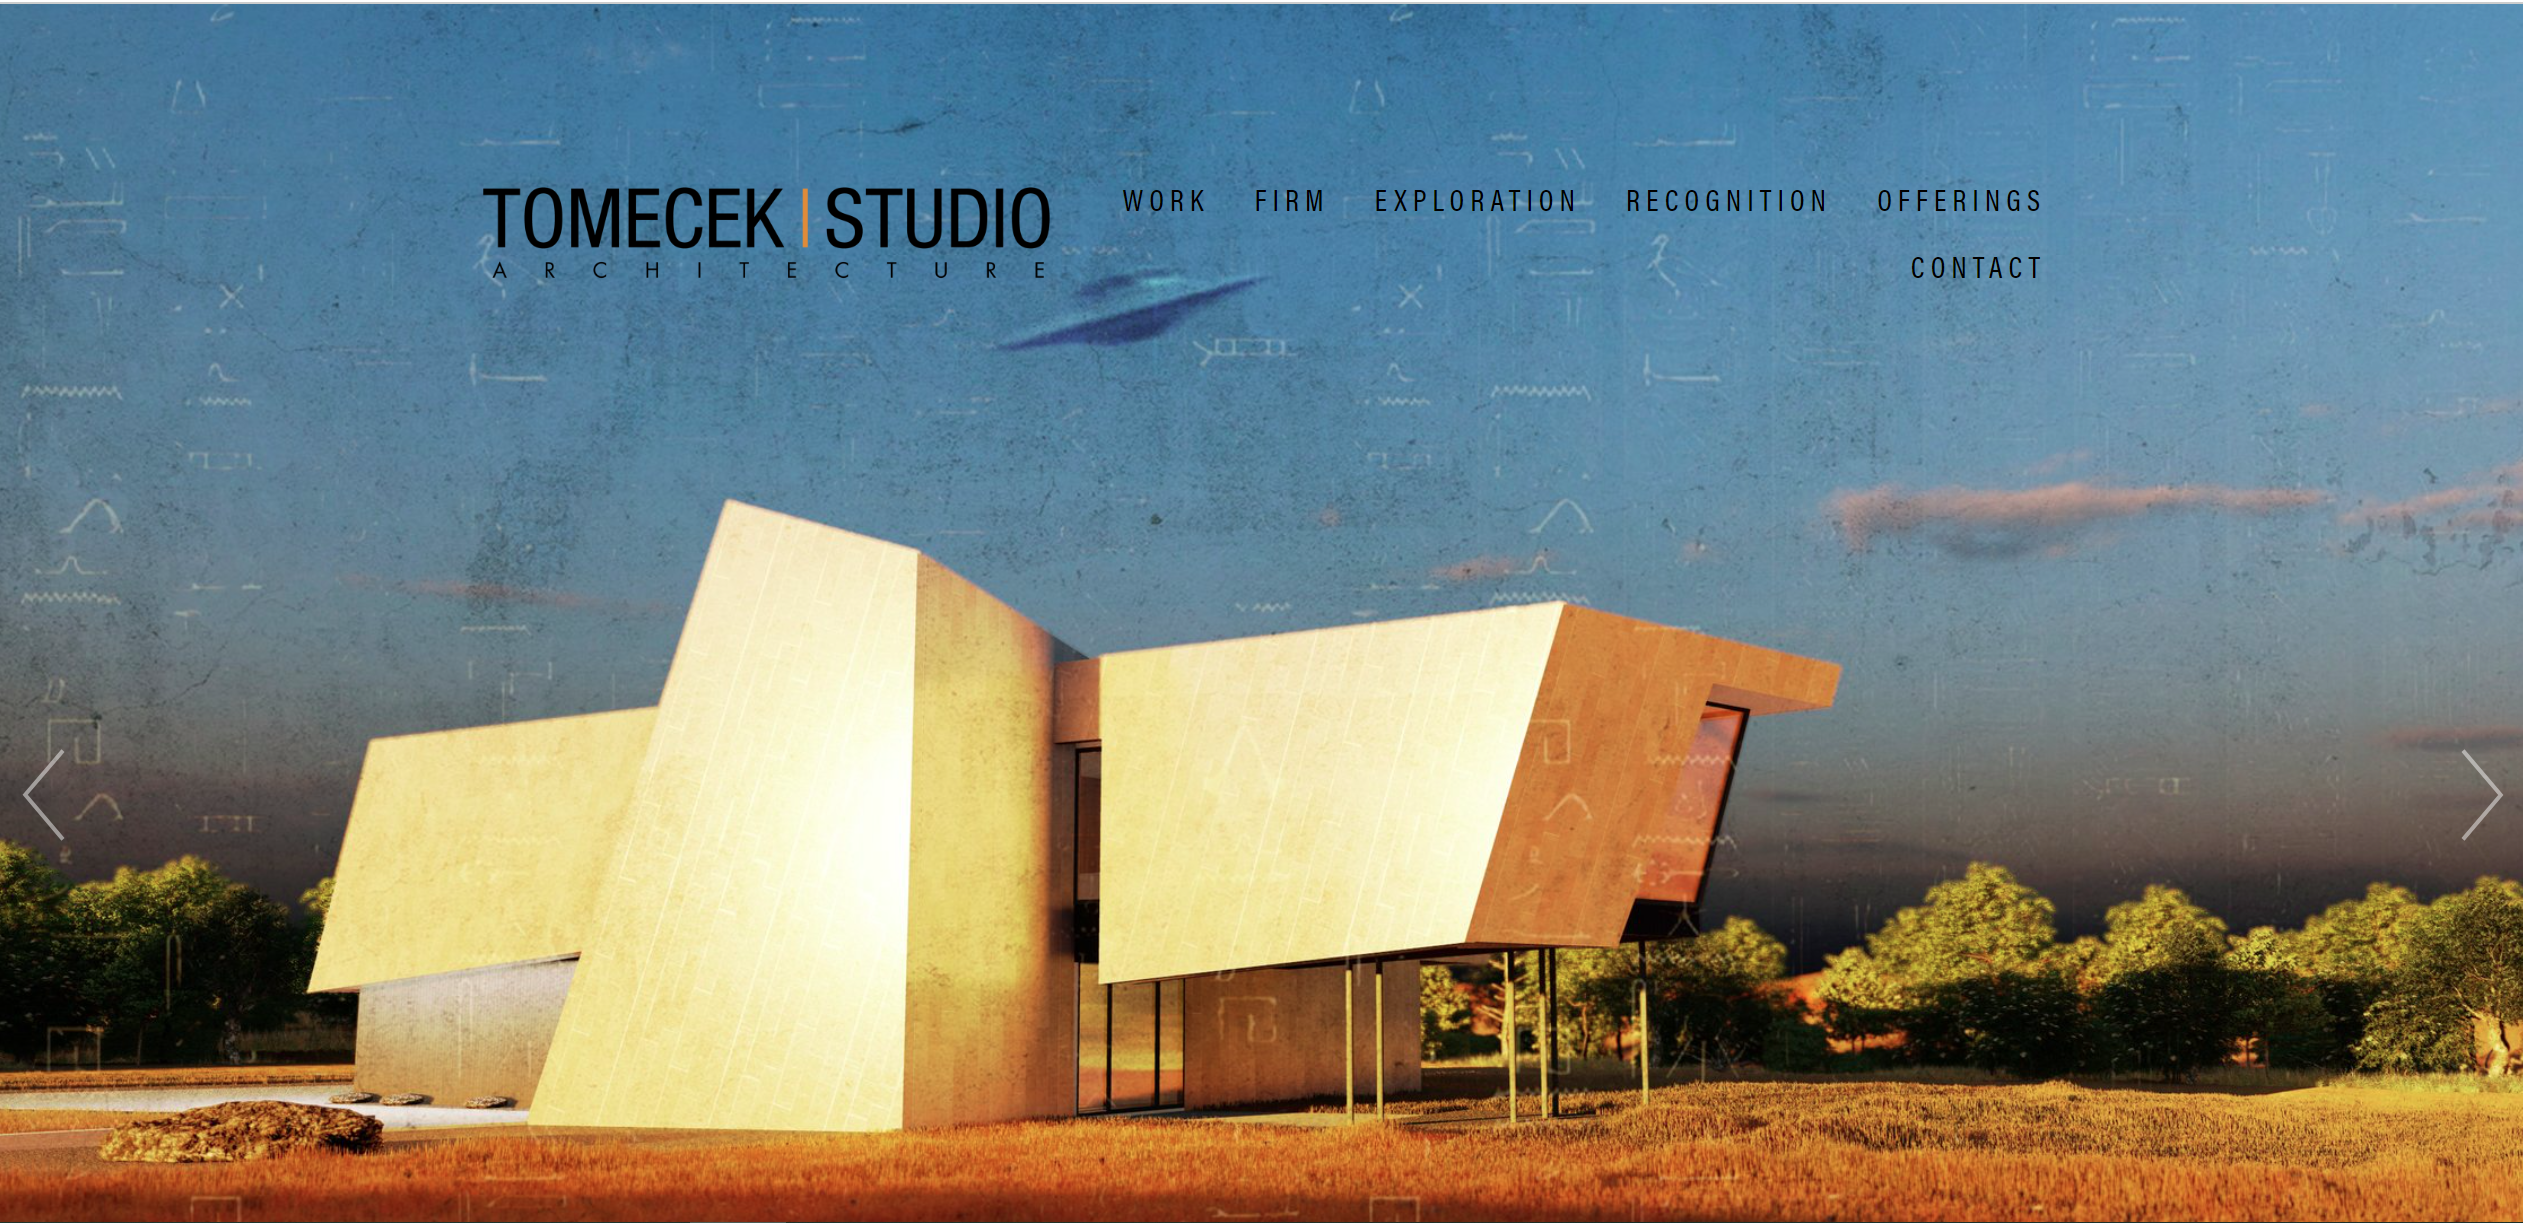 Tomecek Studio Architecture